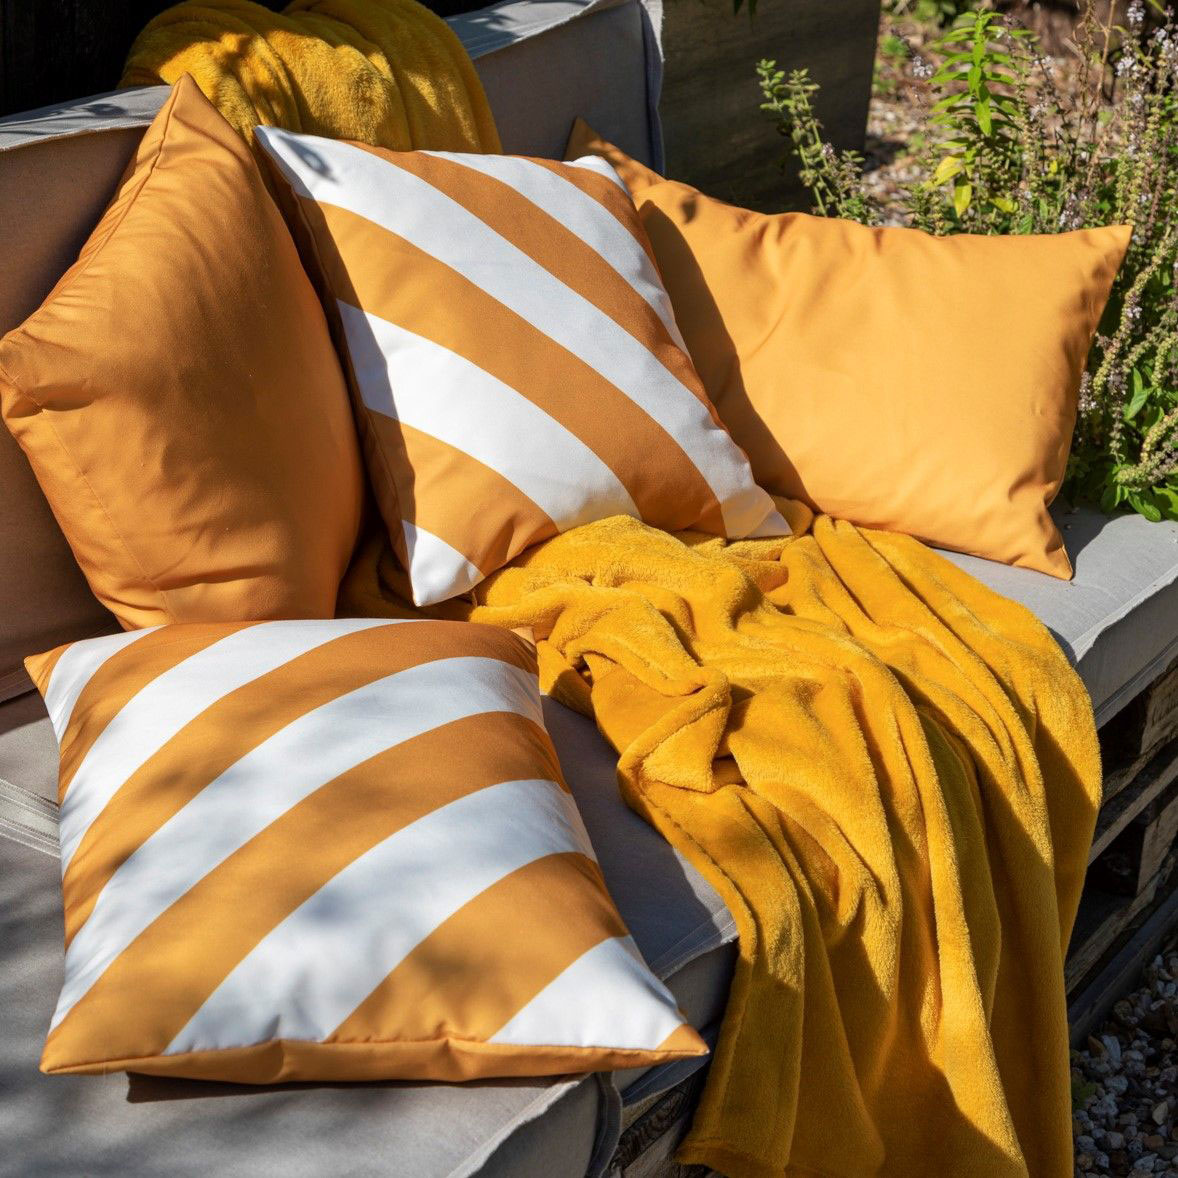 SANZENO - Cushion 45x45 cm Golden Glow - yellow-ochre